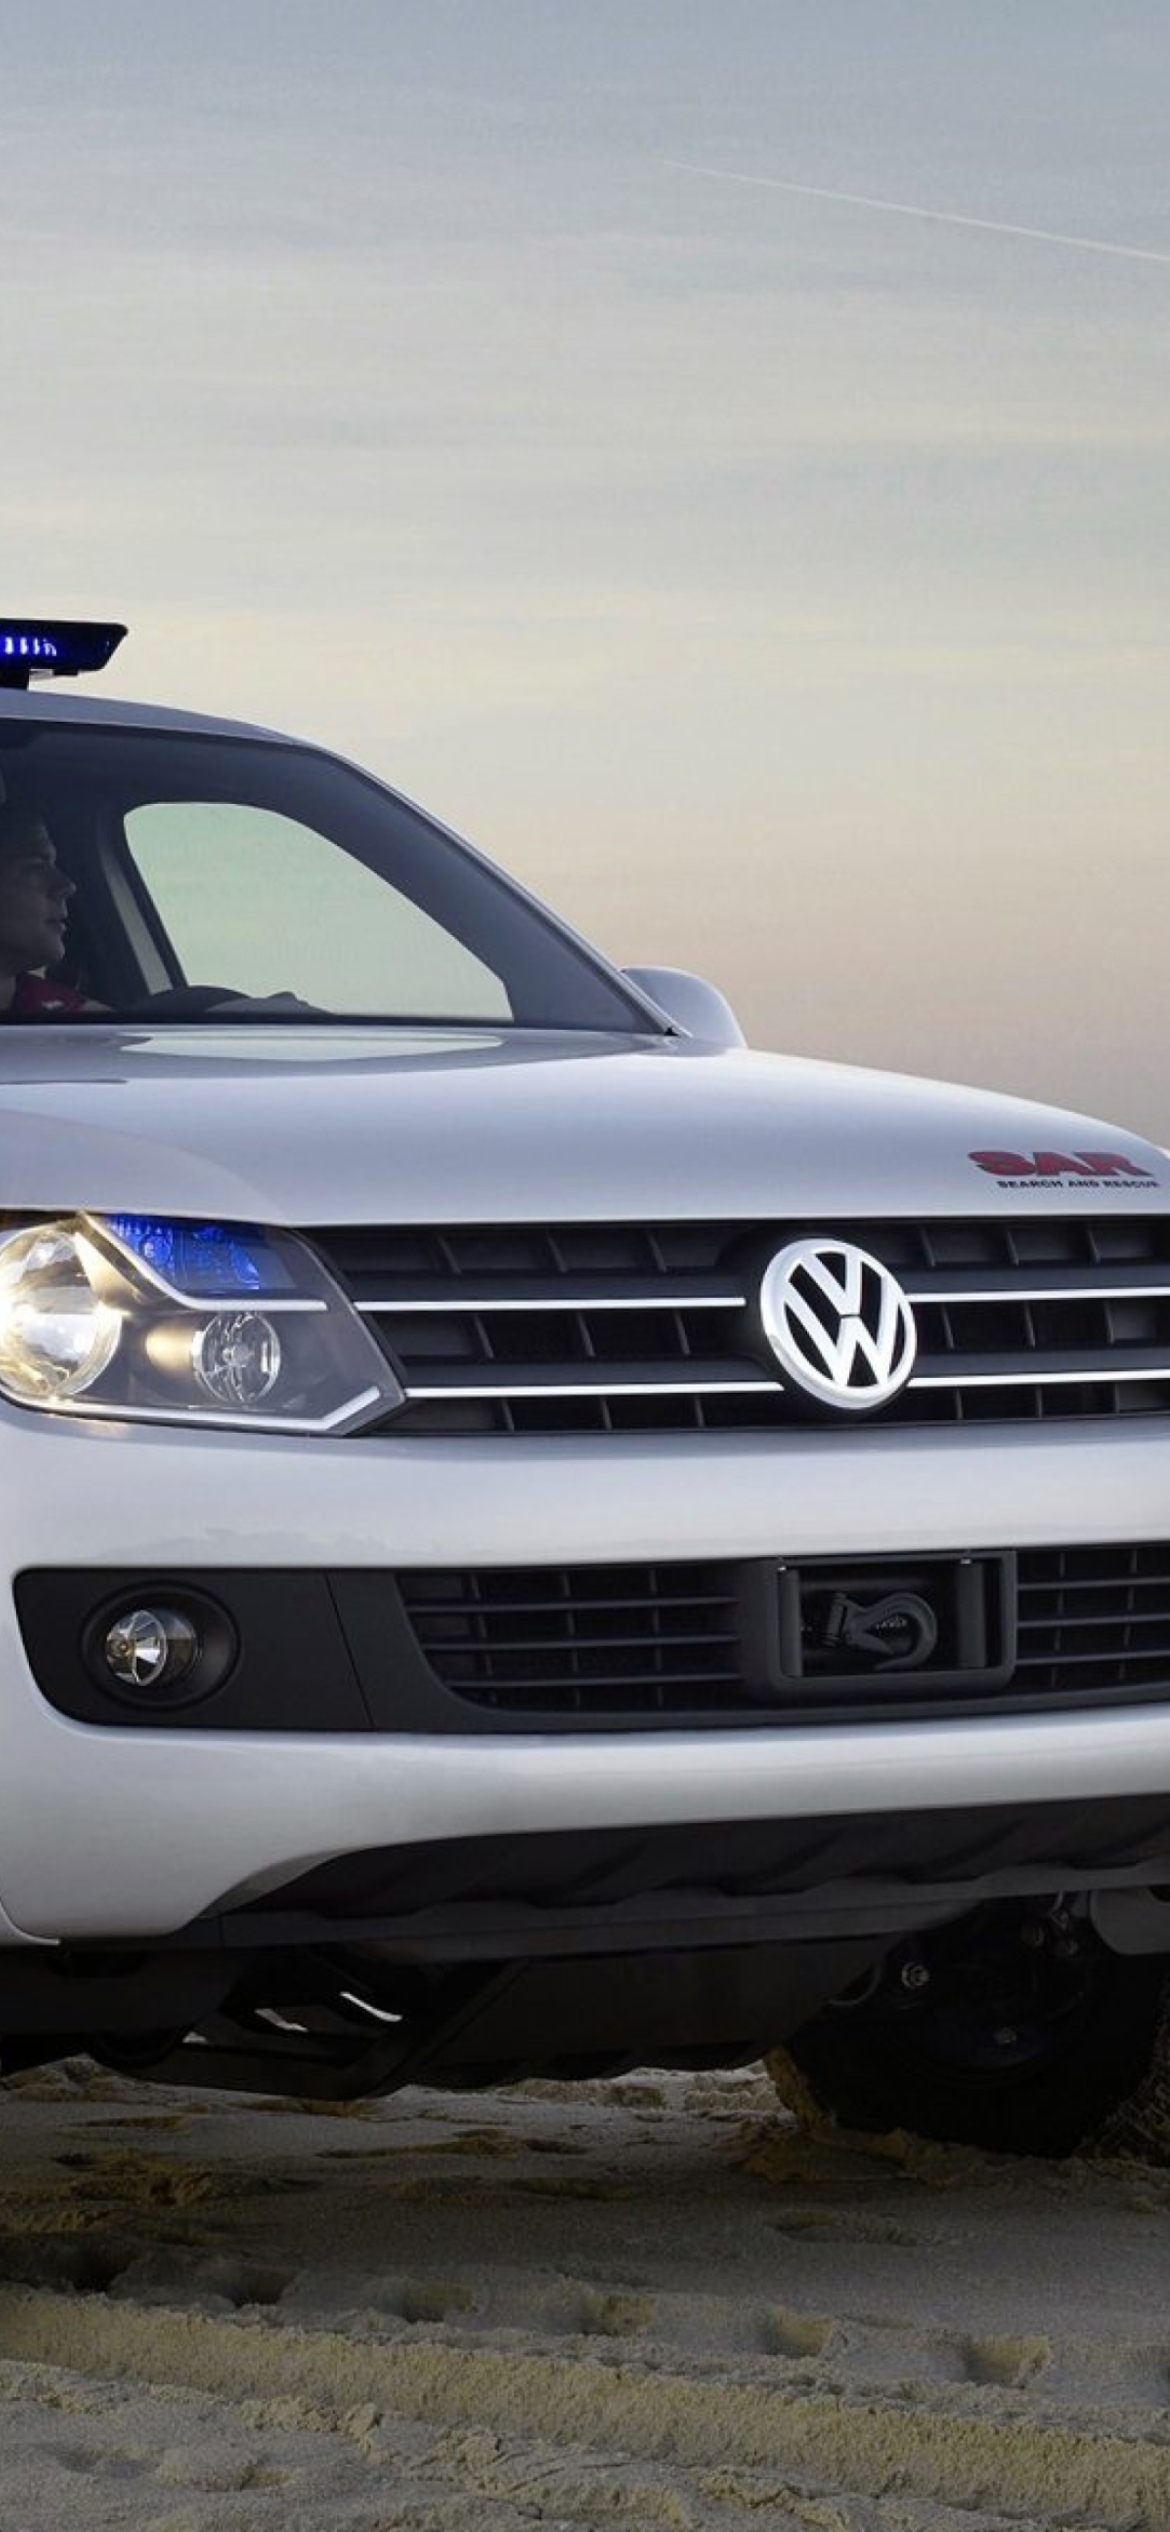 Fondo de pantalla Volkswagen Pickup Concept 1170x2532